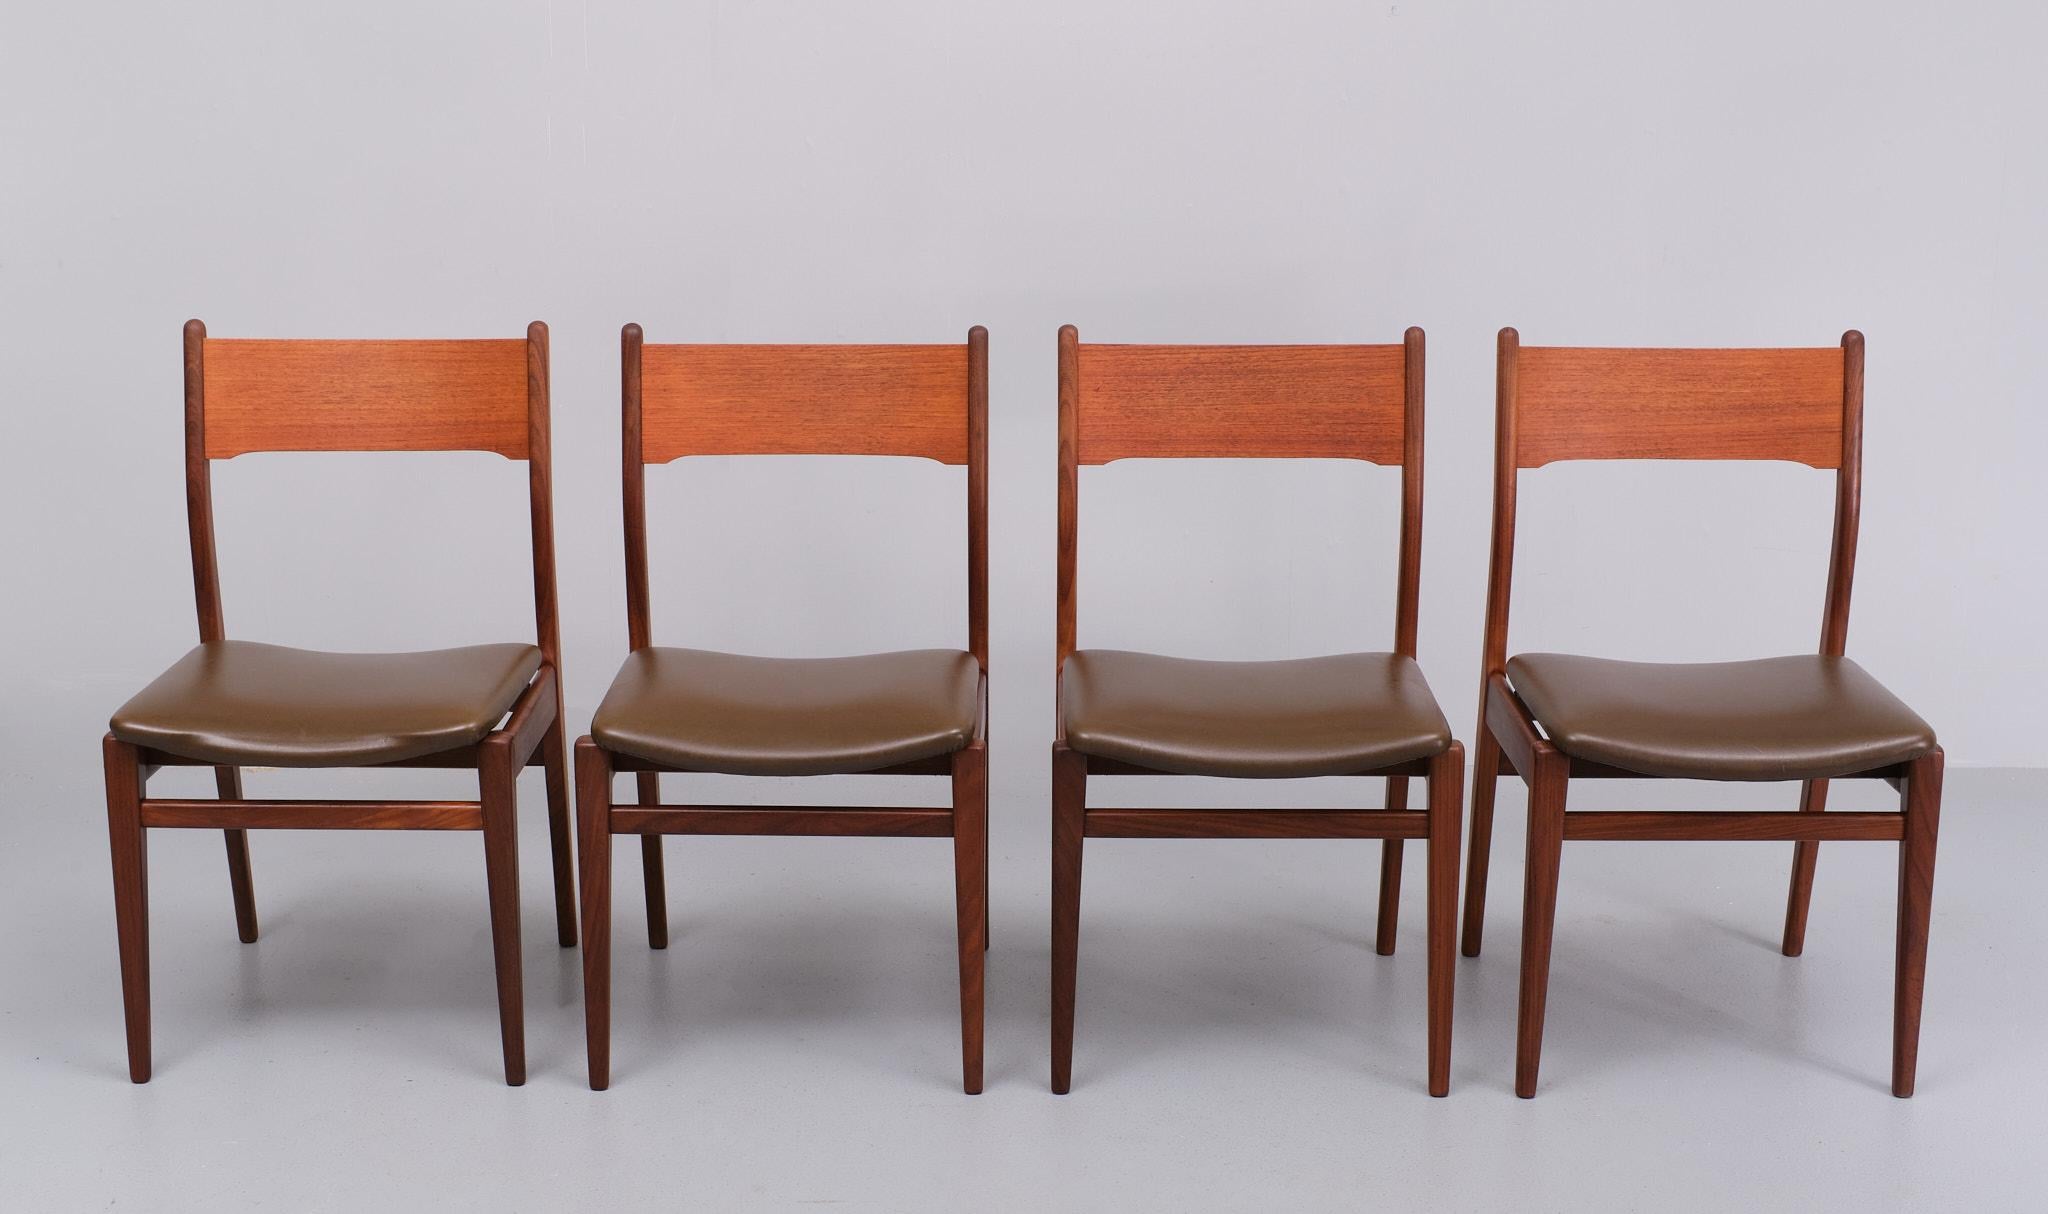 Dutch Louis van Teeffelen  Teak dining chairs 1960s  For Sale